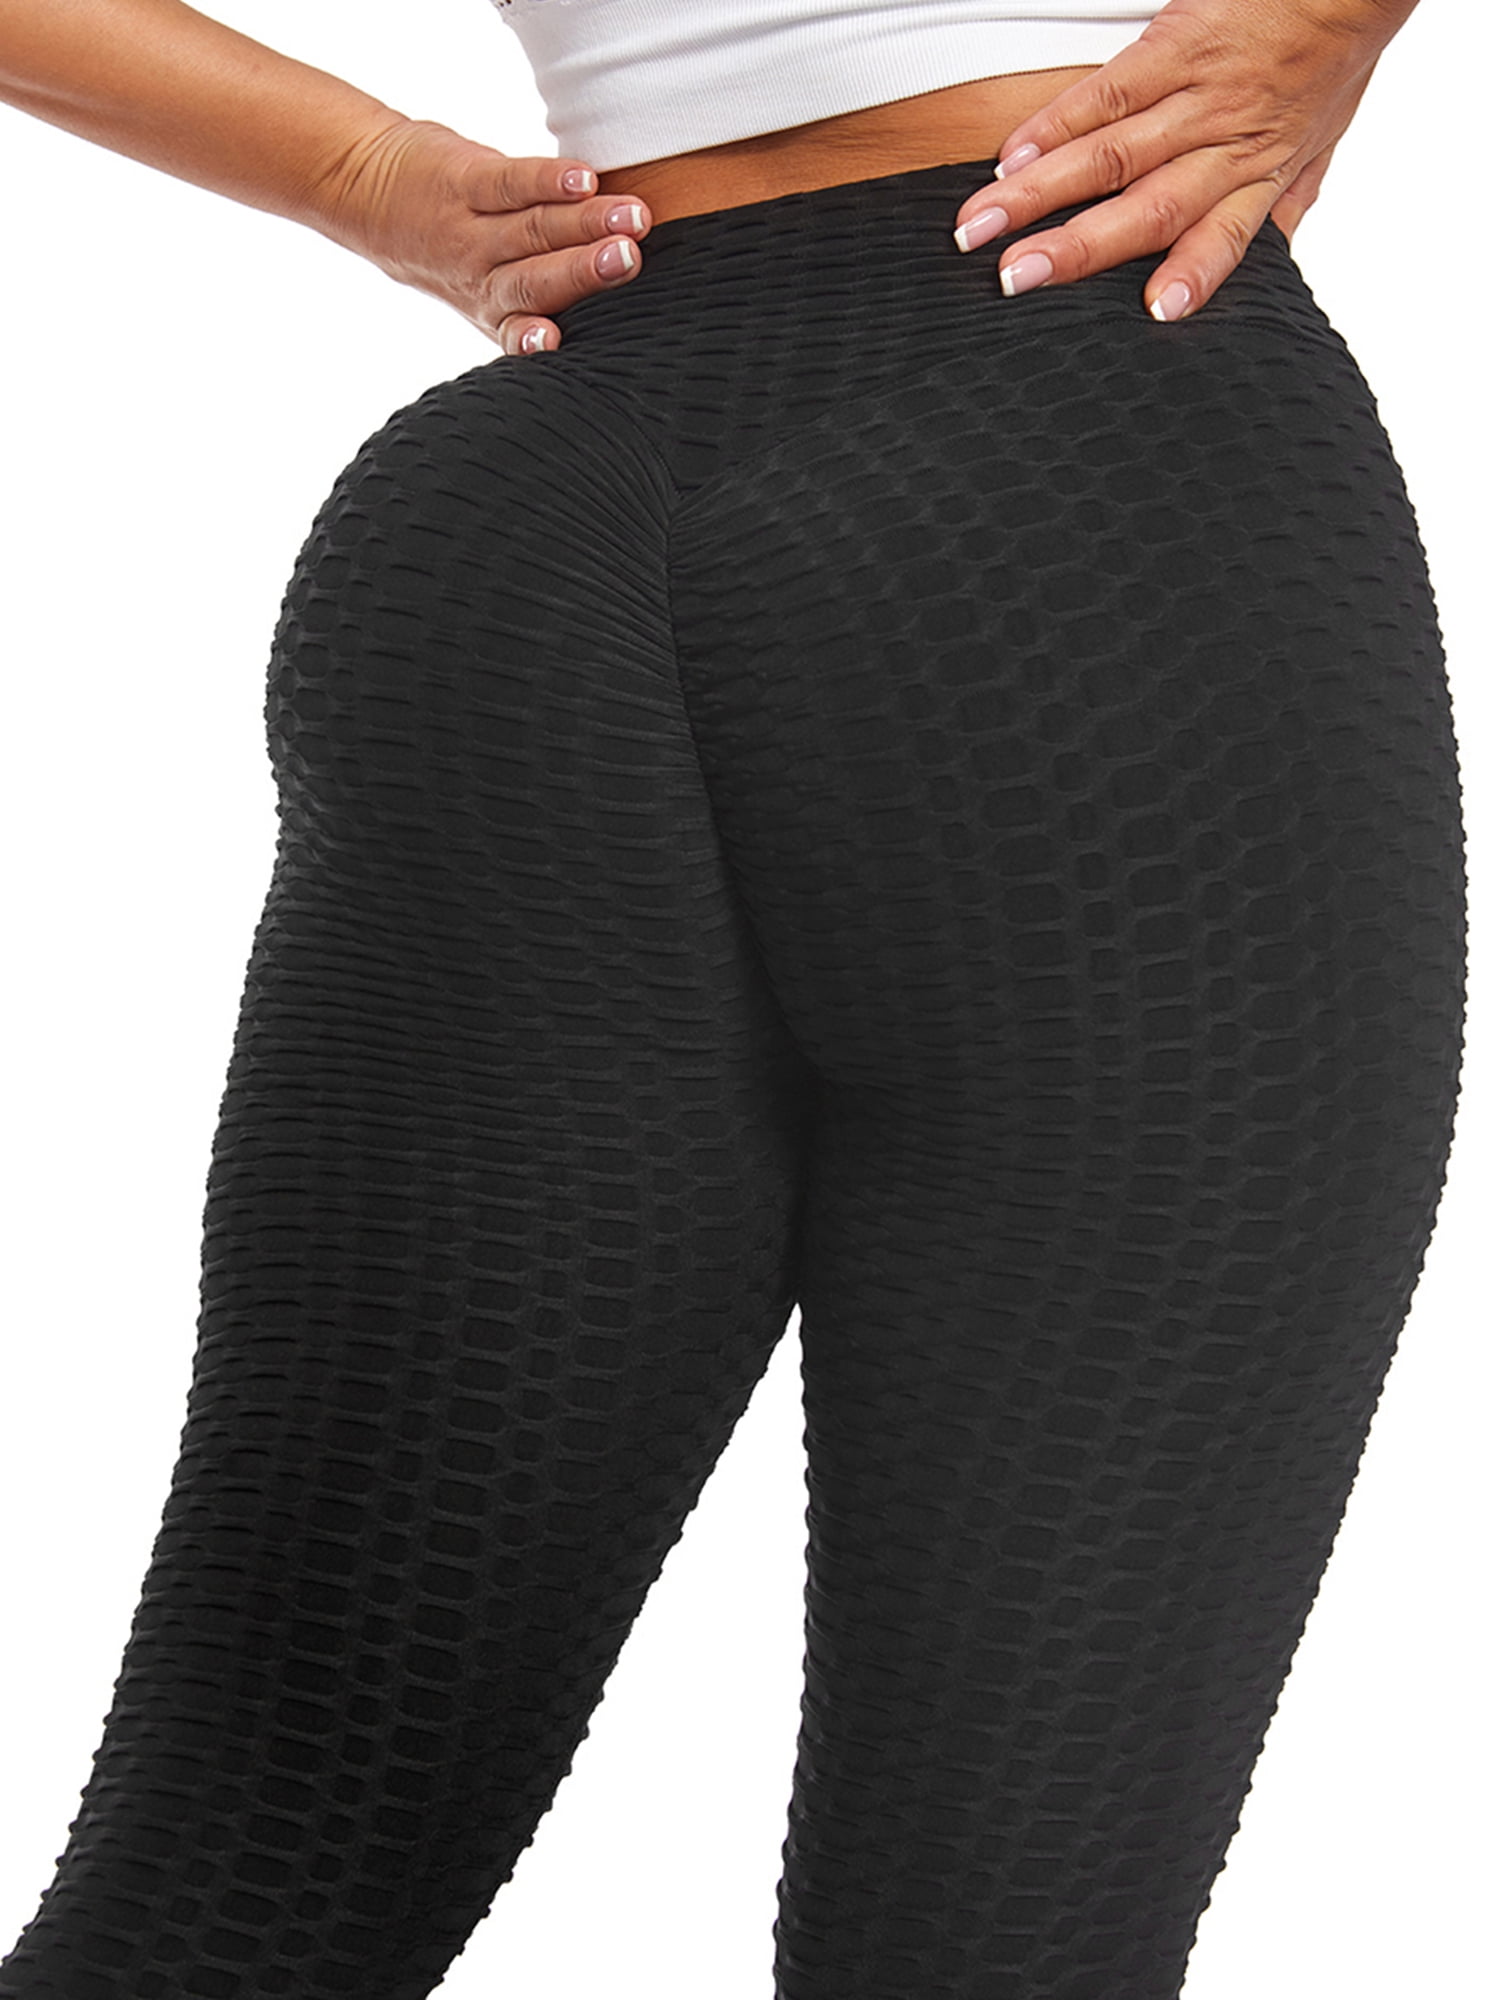 Pxiakgy yoga pants Yoga Fivepoint Leggings Women's Exercise Sweatpants  Pants Pocket Fitness Running Exercise Pants Black + S 